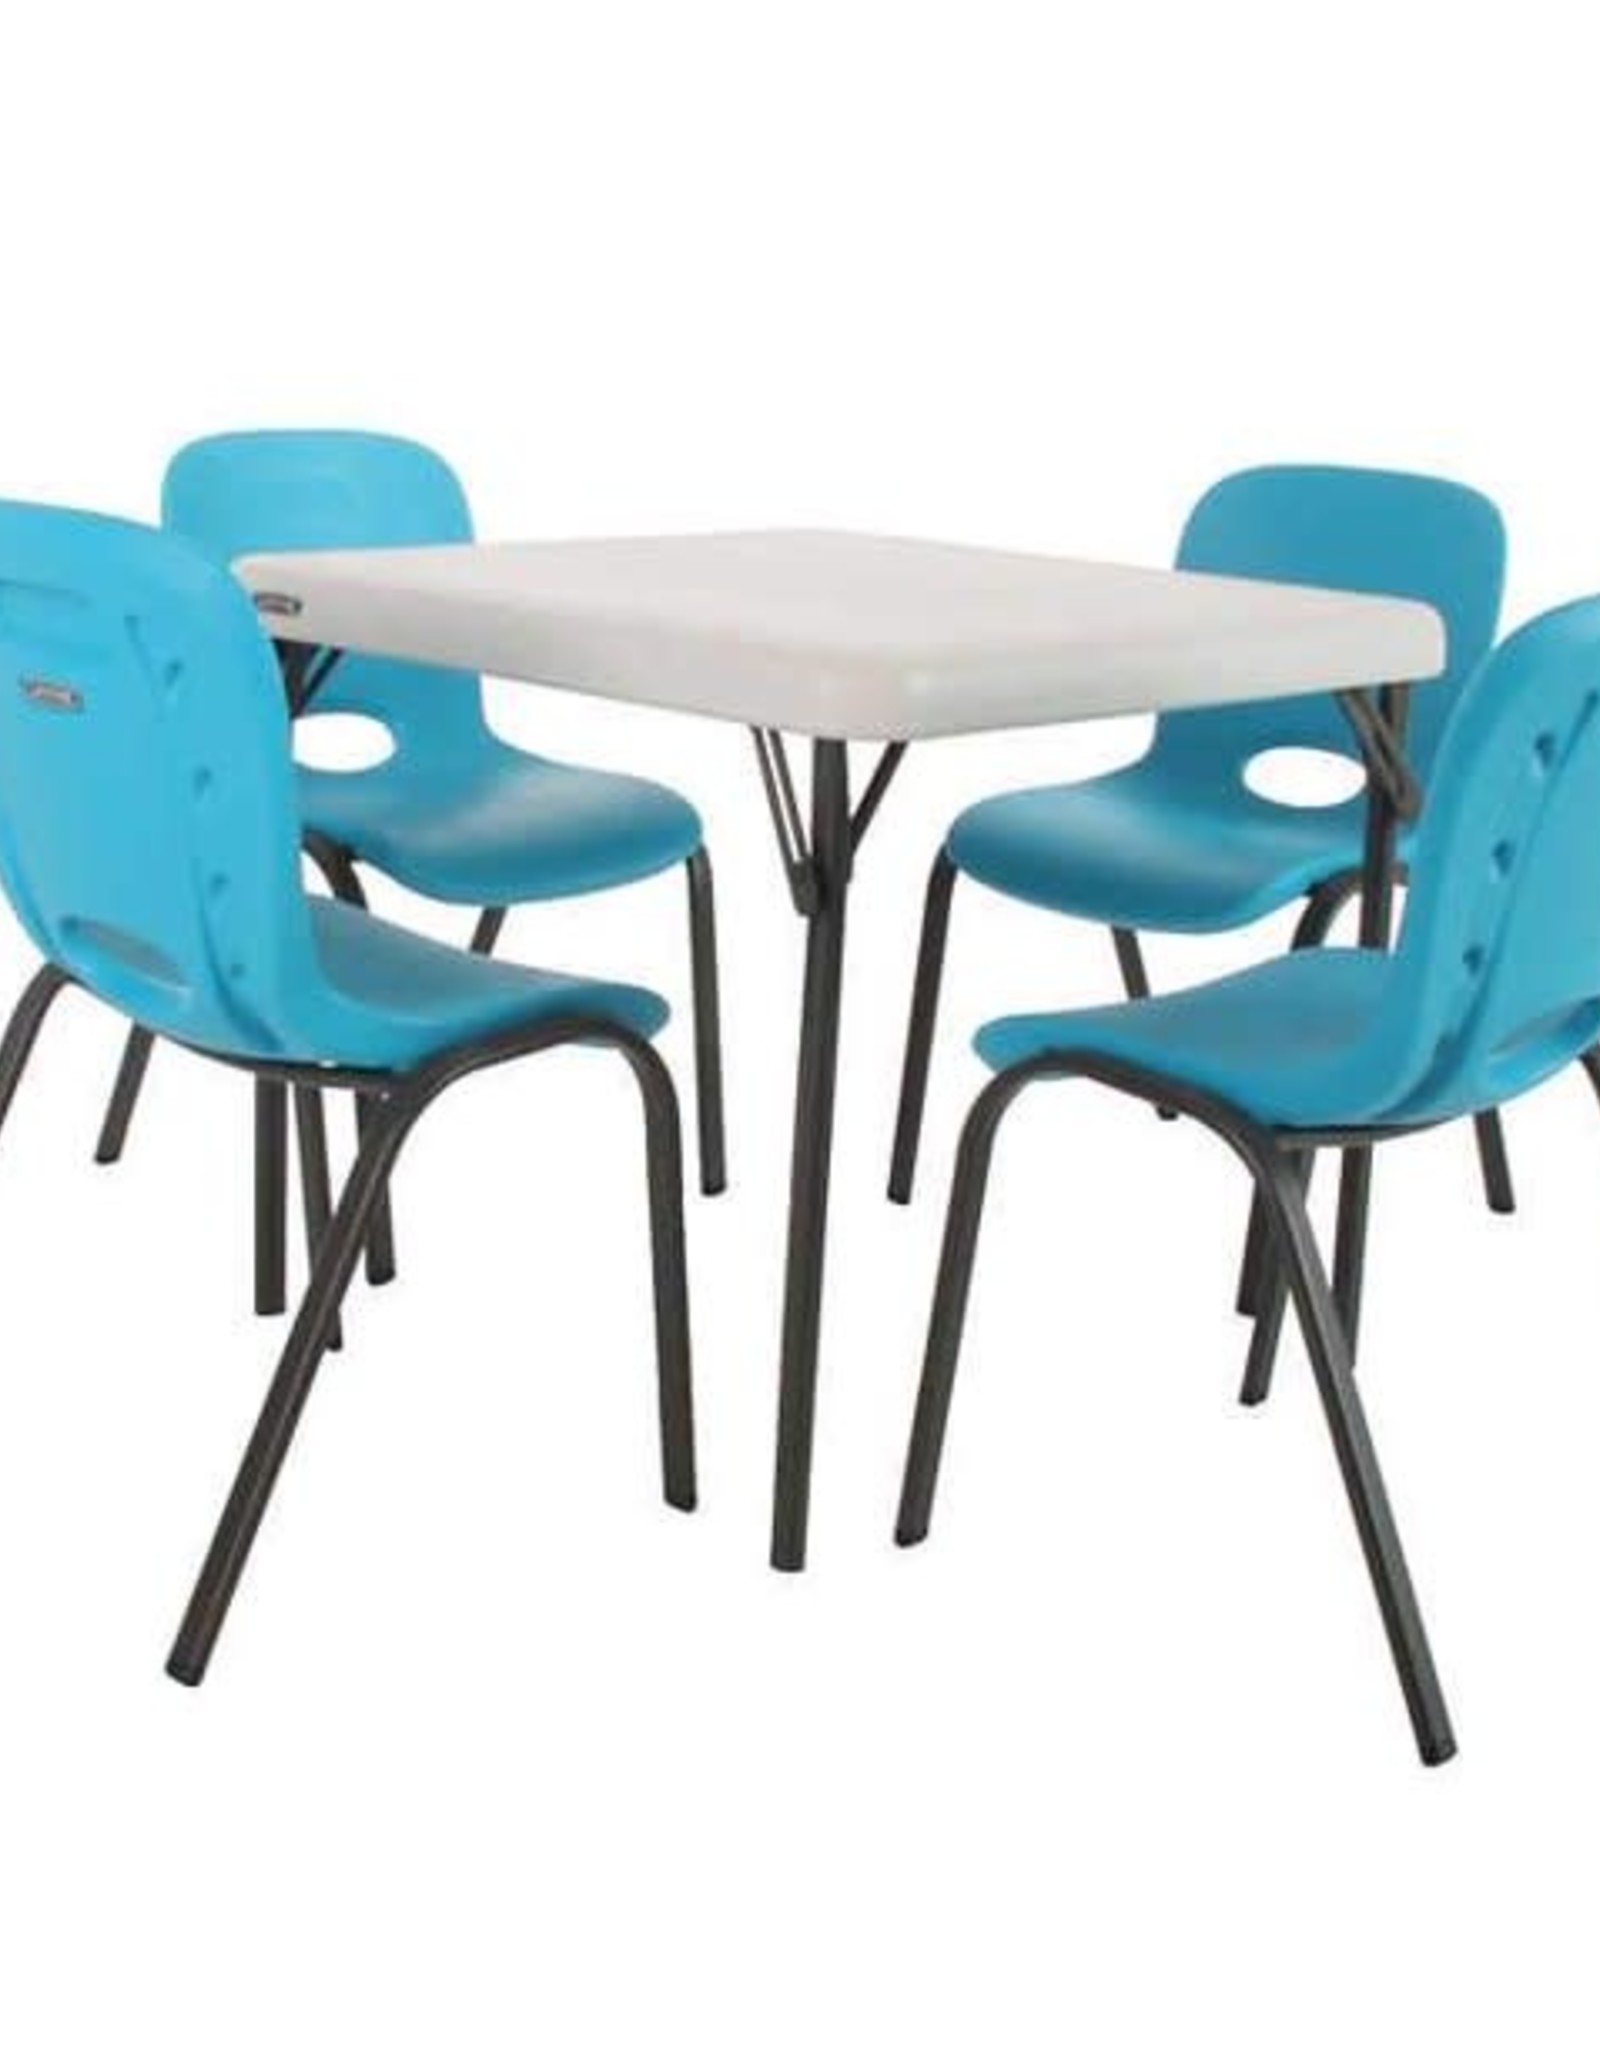 Lifetime Children's Table & Chair Set